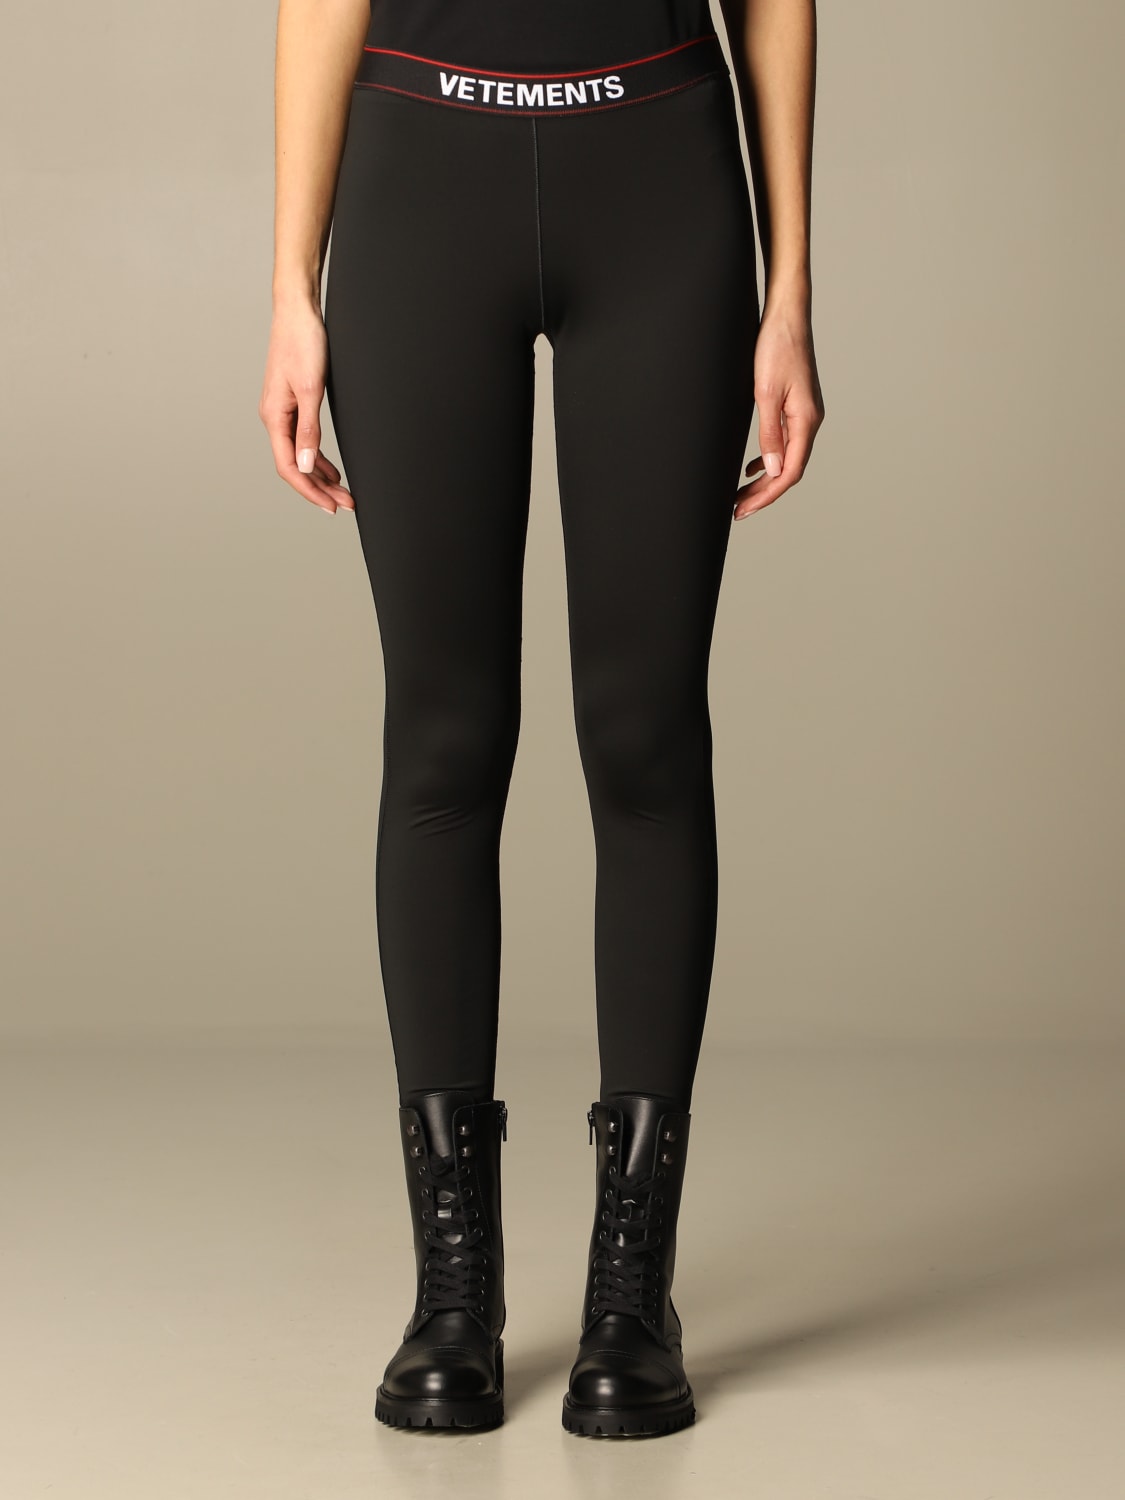 VTMNTS: Vetements stretch leggings with logo - Black  VTMNTS pantalone  WE51PA640B 1332 online at